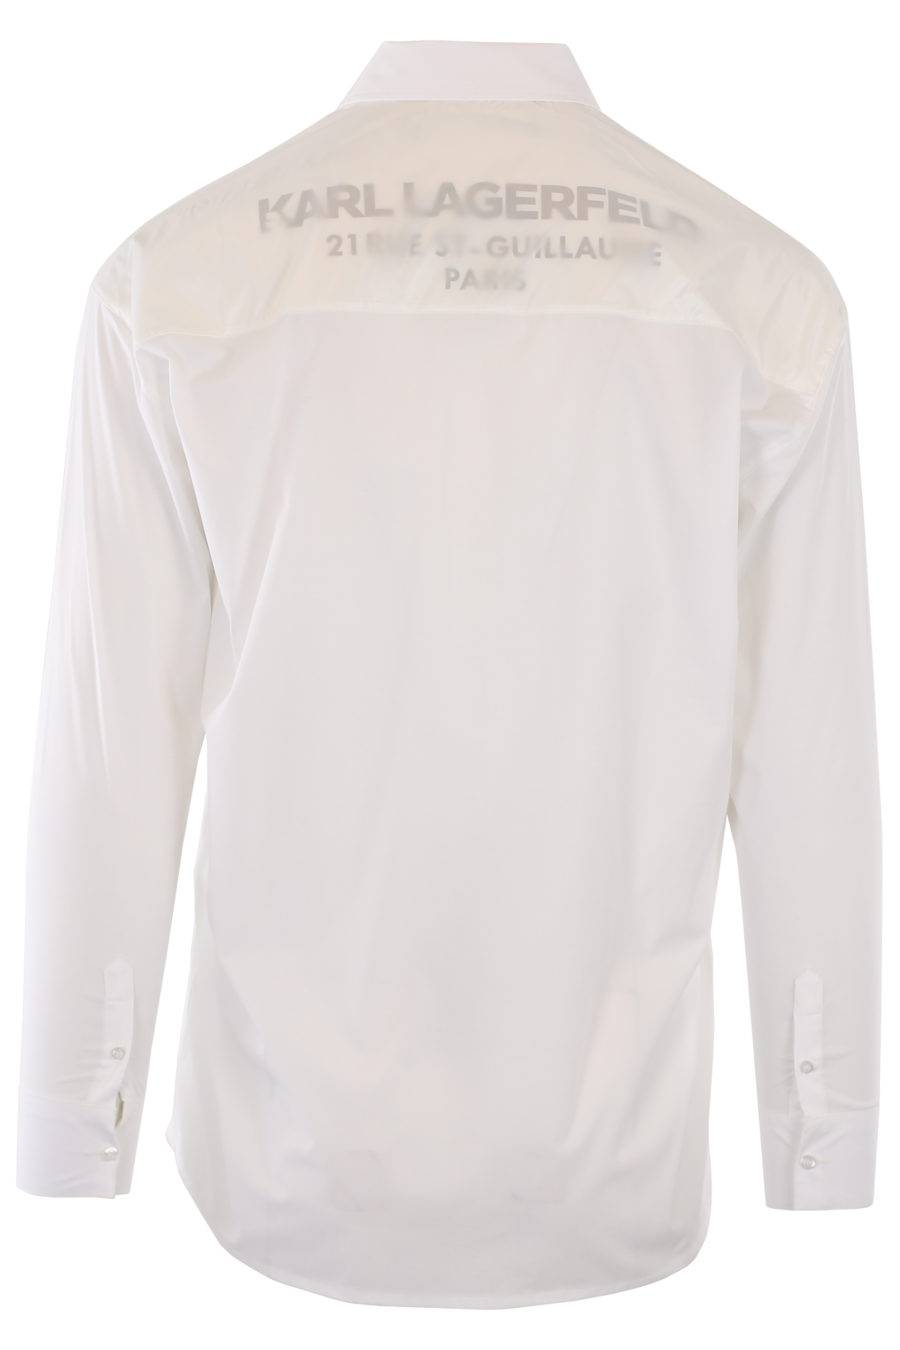 White shirt with black logo and satin detail - IMG 1144